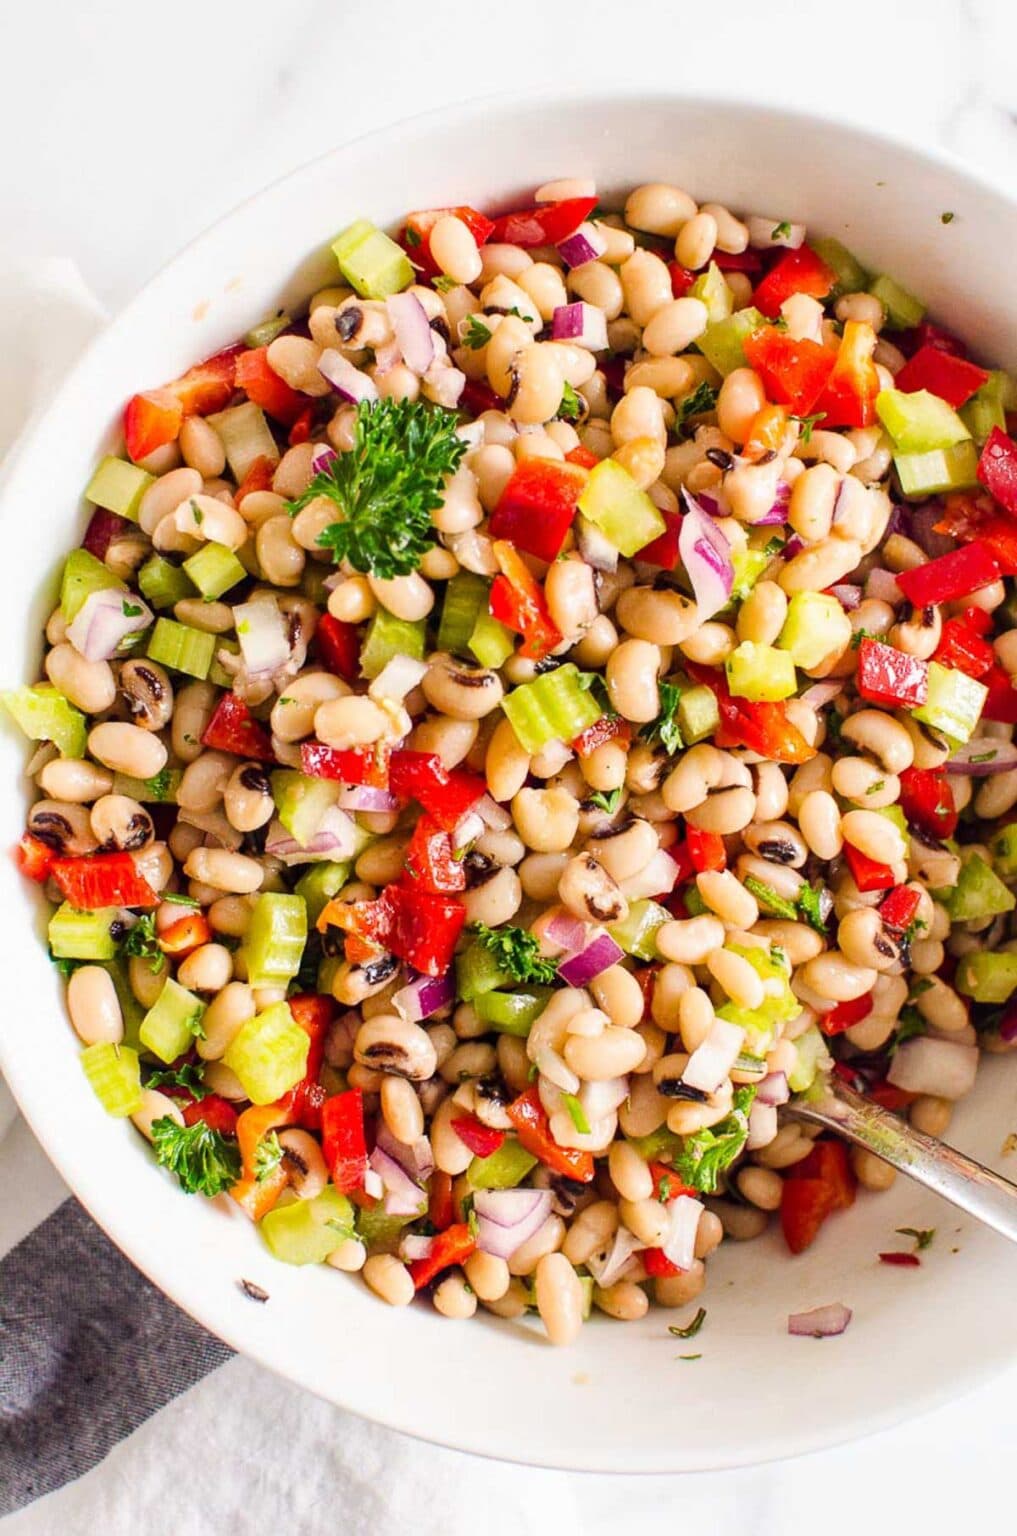 Easy White Bean Salad - iFoodReal.com